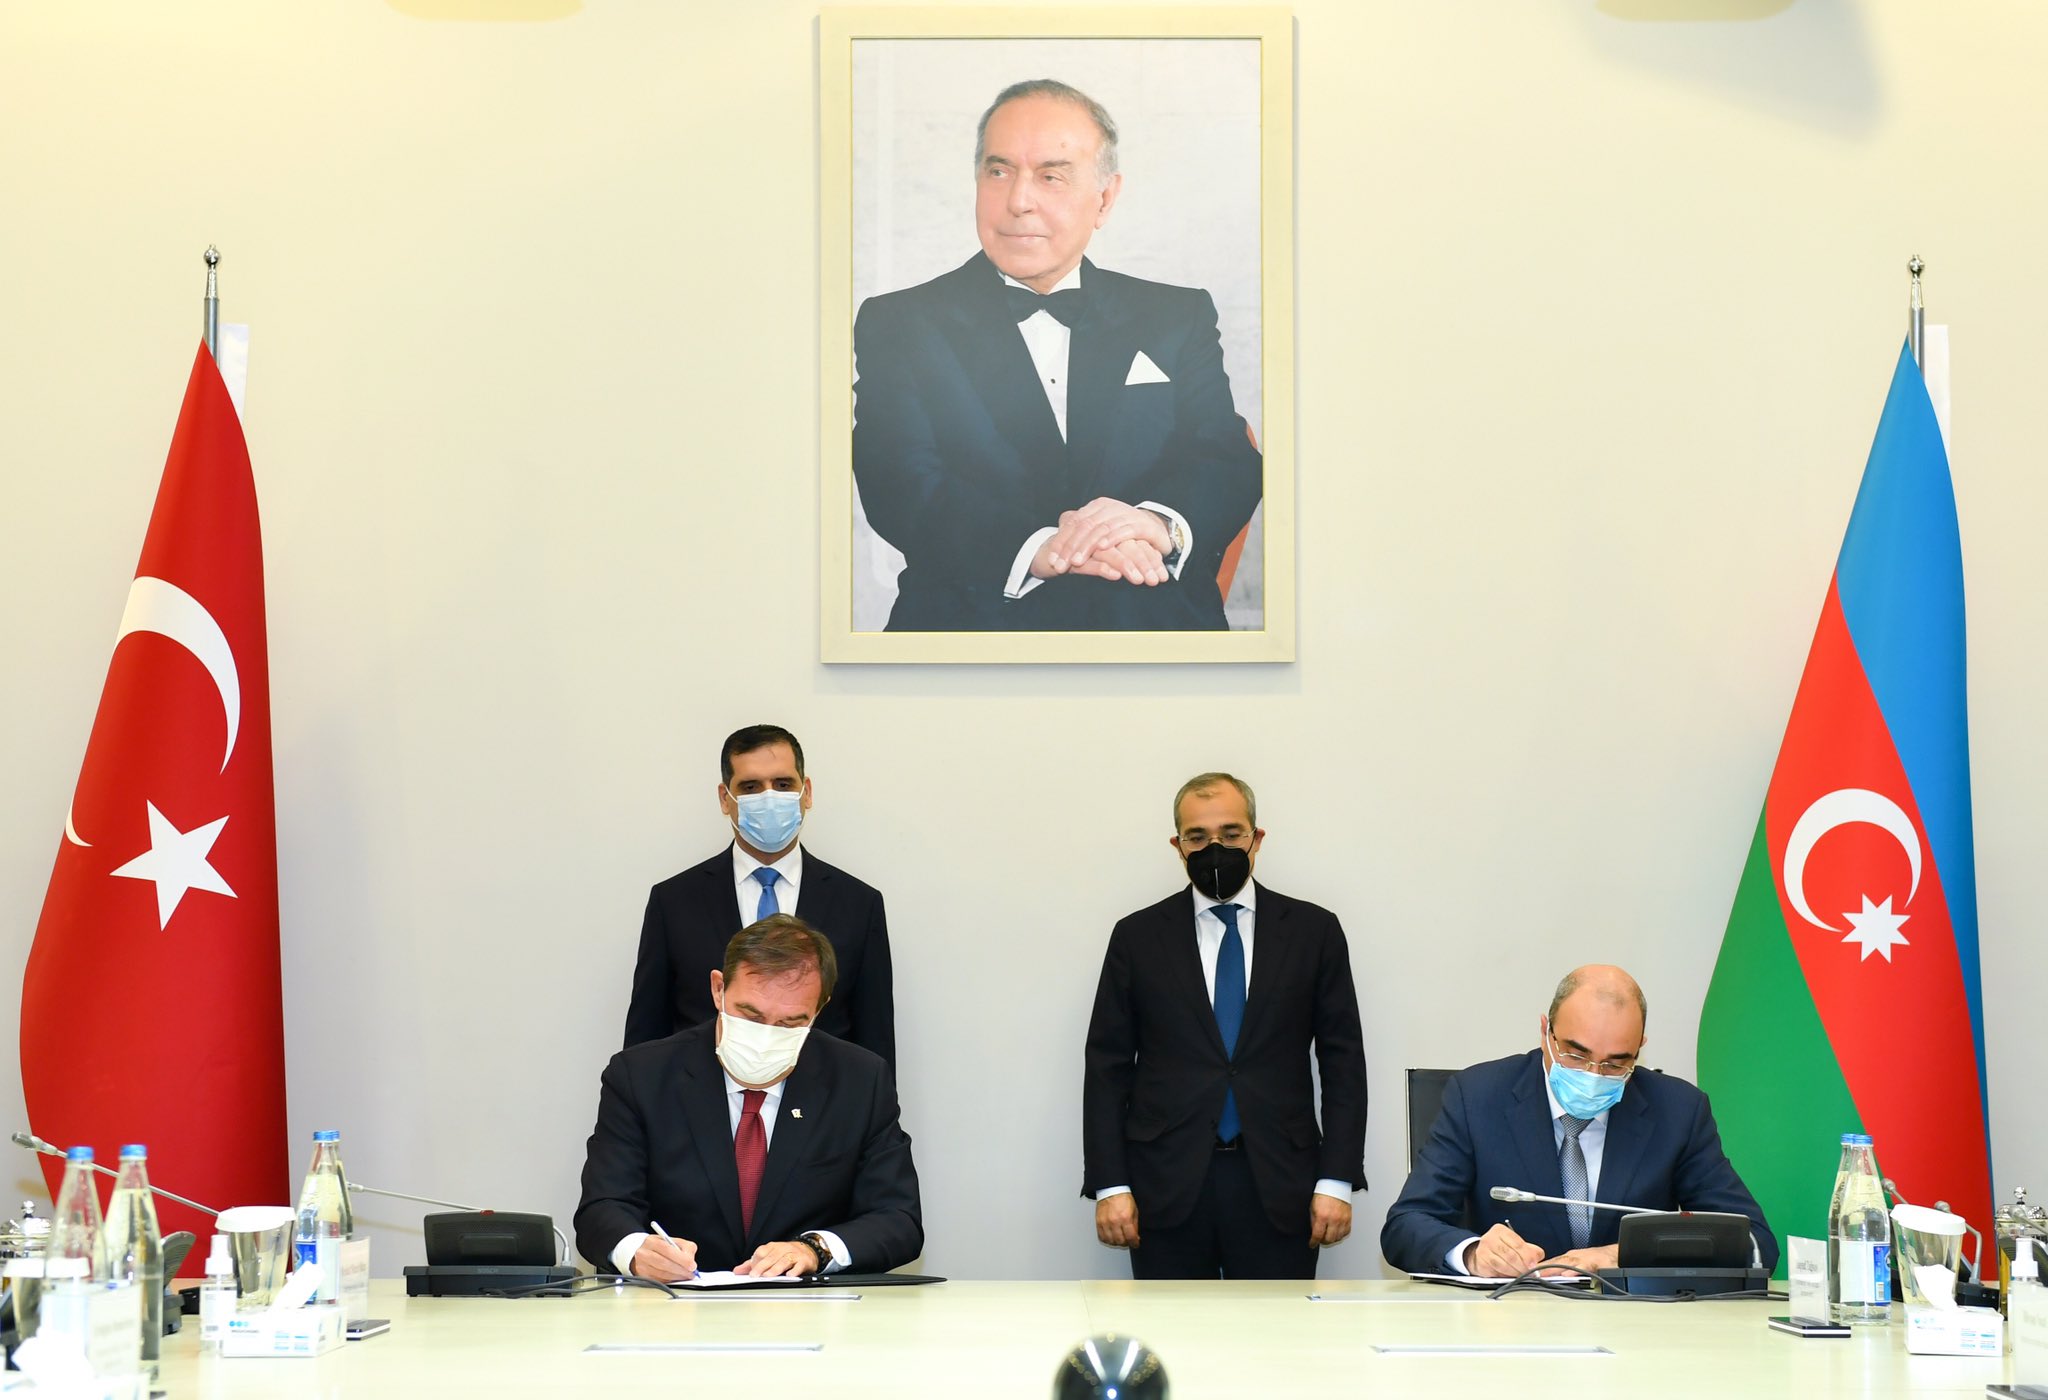 azerlotereyanin-idareetmeye-verilmesine-dair-muqavile-imzalandi